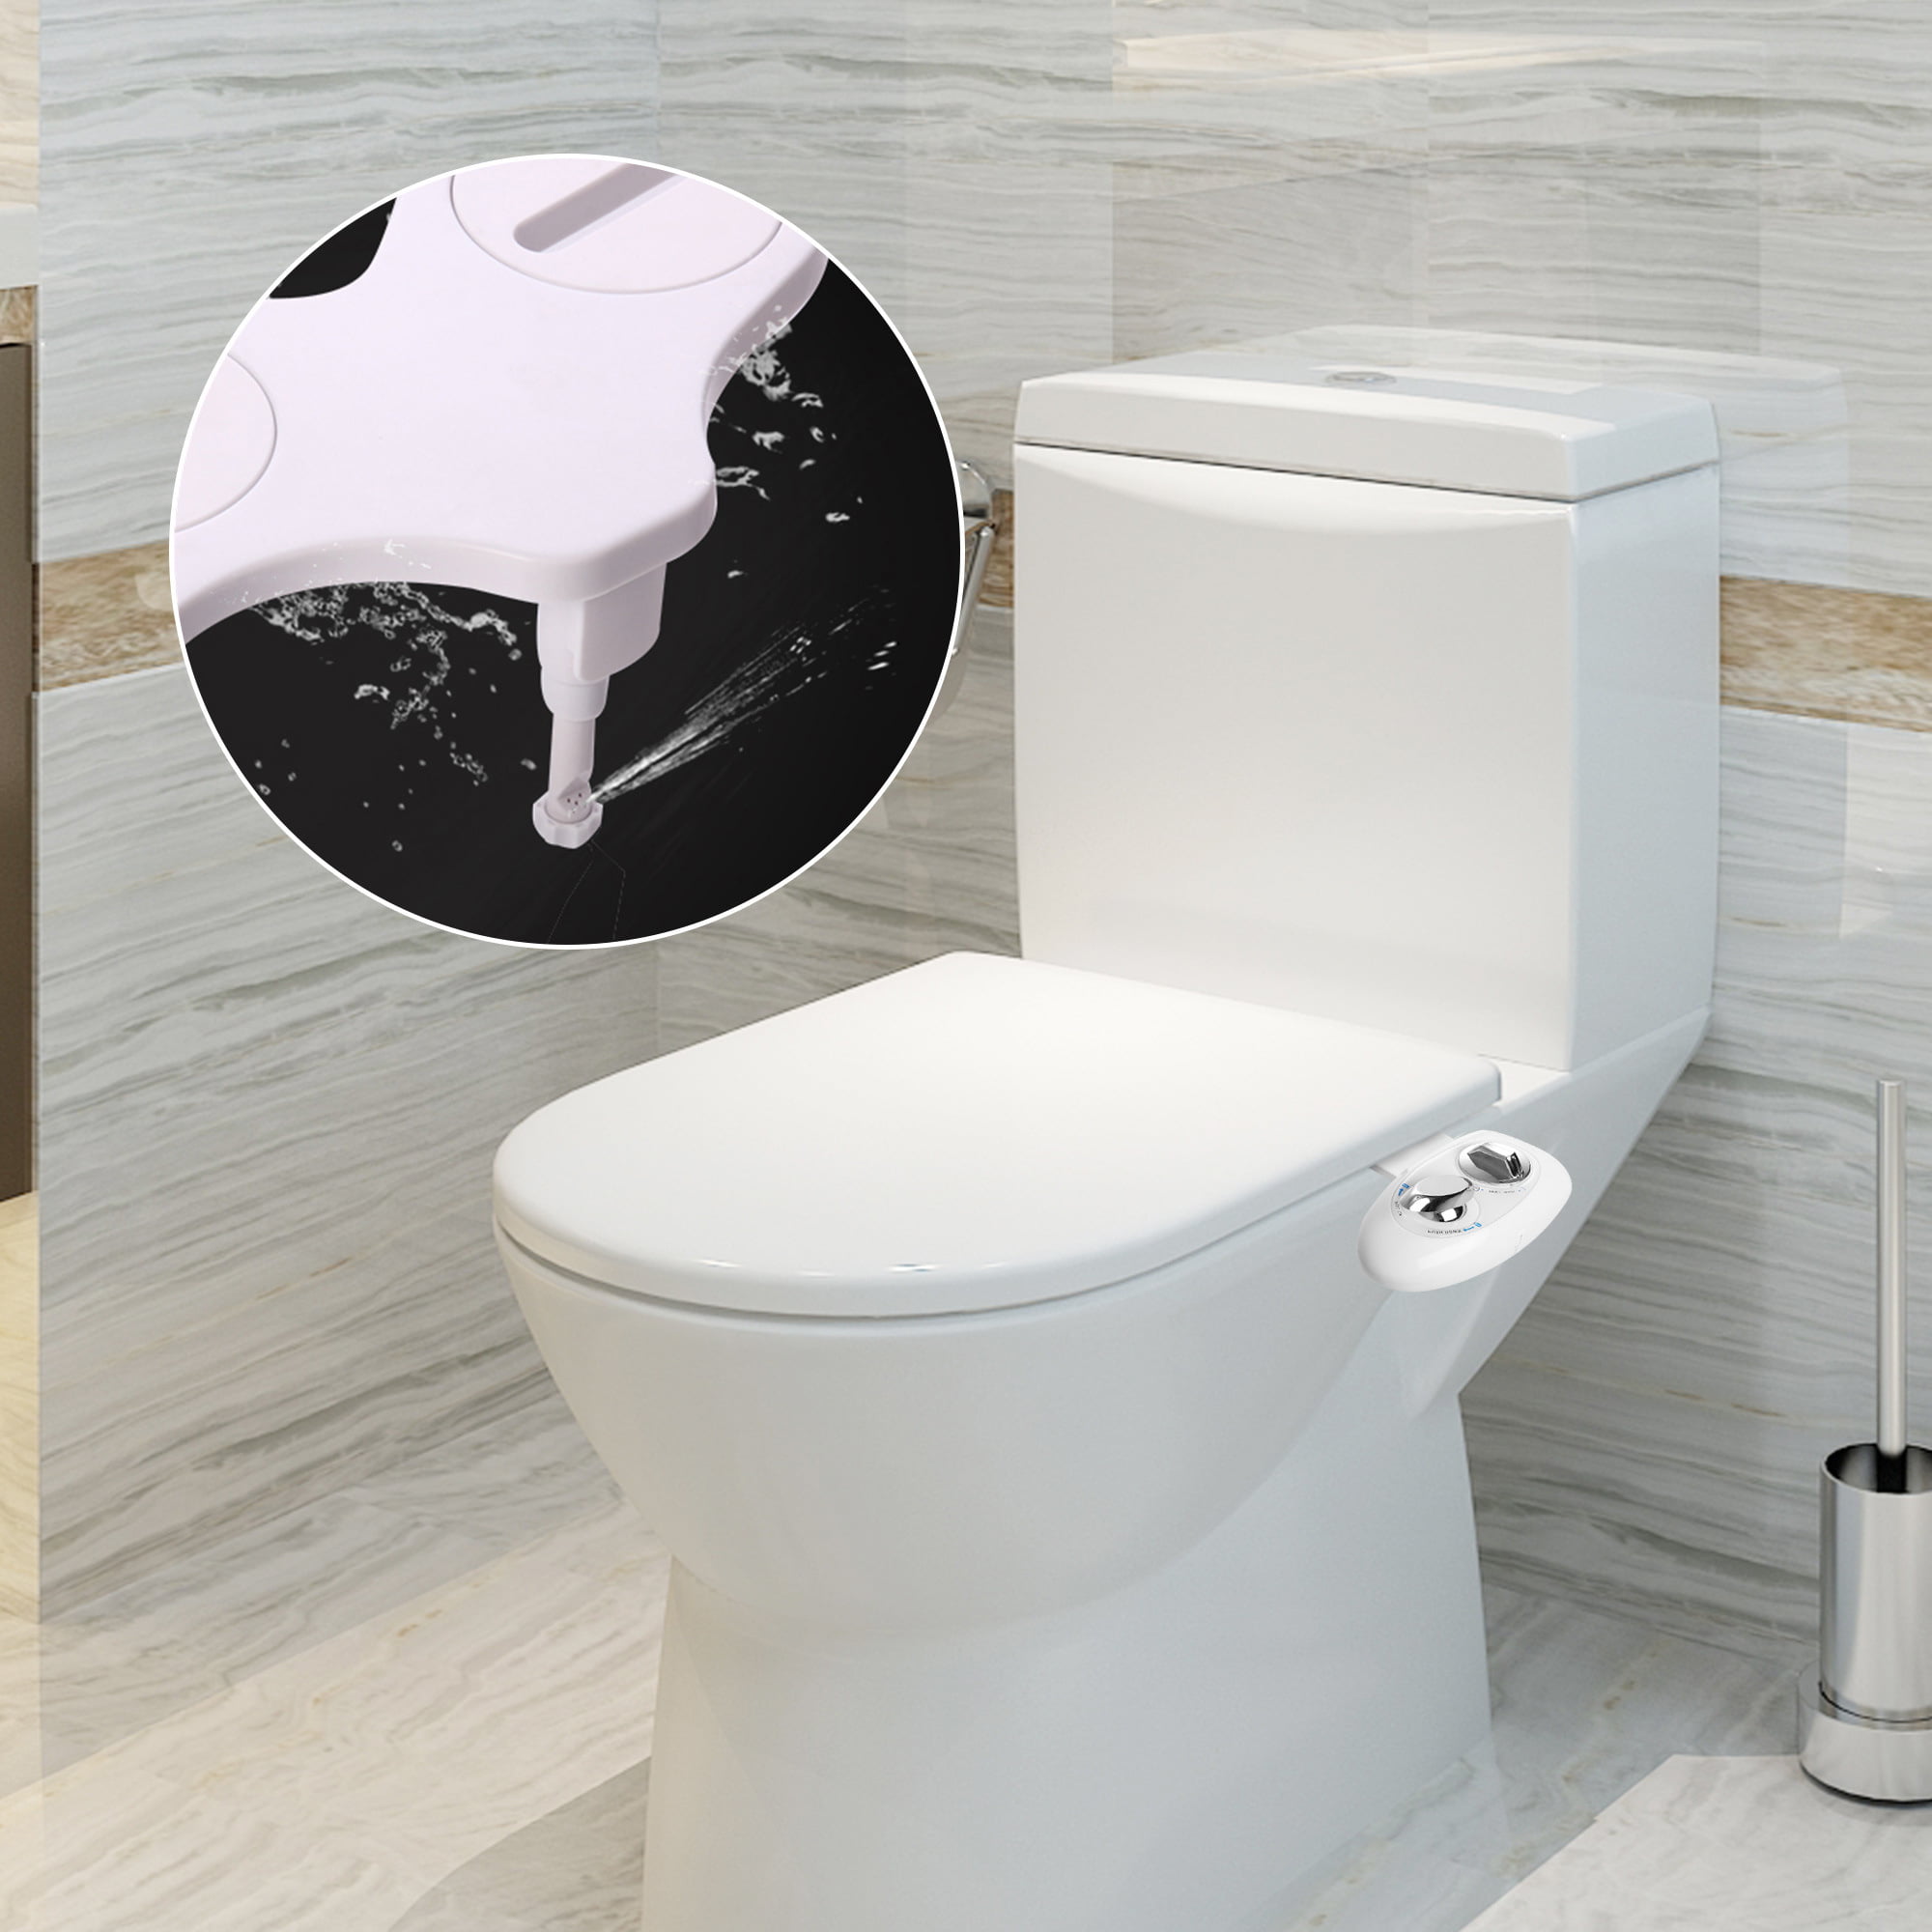 Hygiene Bidet Toilet Seat Attachment non-electric toilet self-cleaning Nozzle